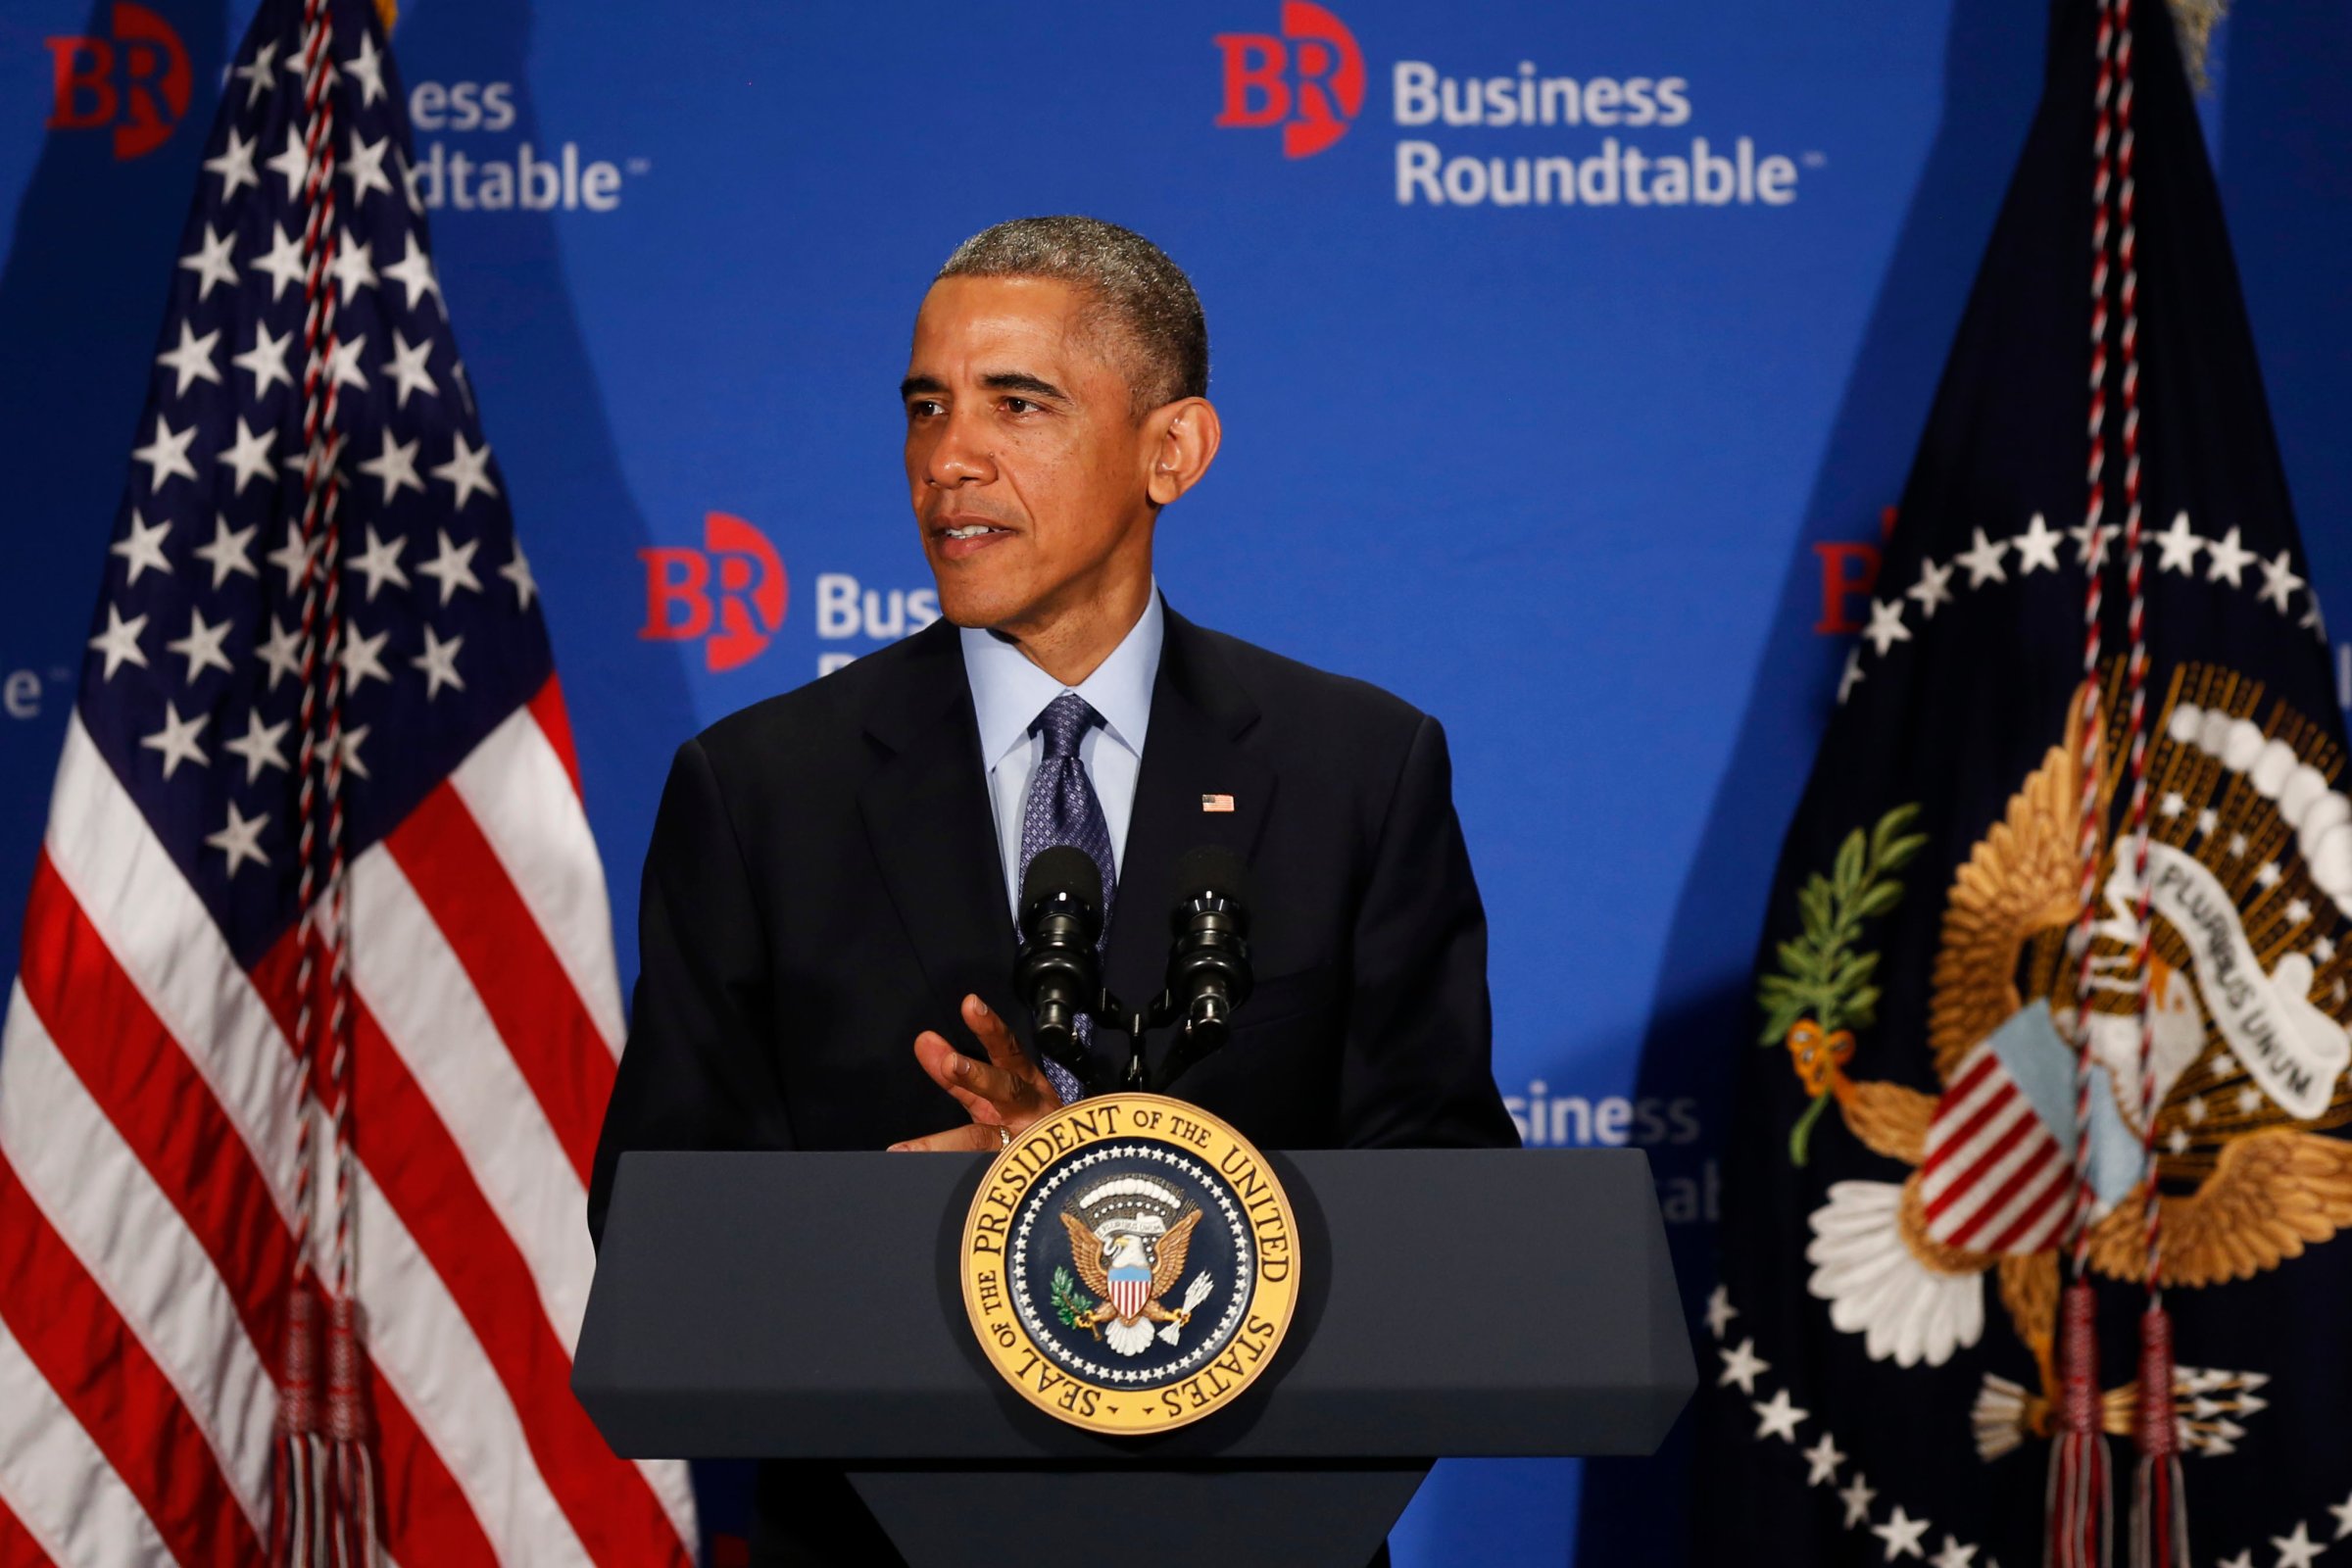 Obama Addresses Business Roundtable